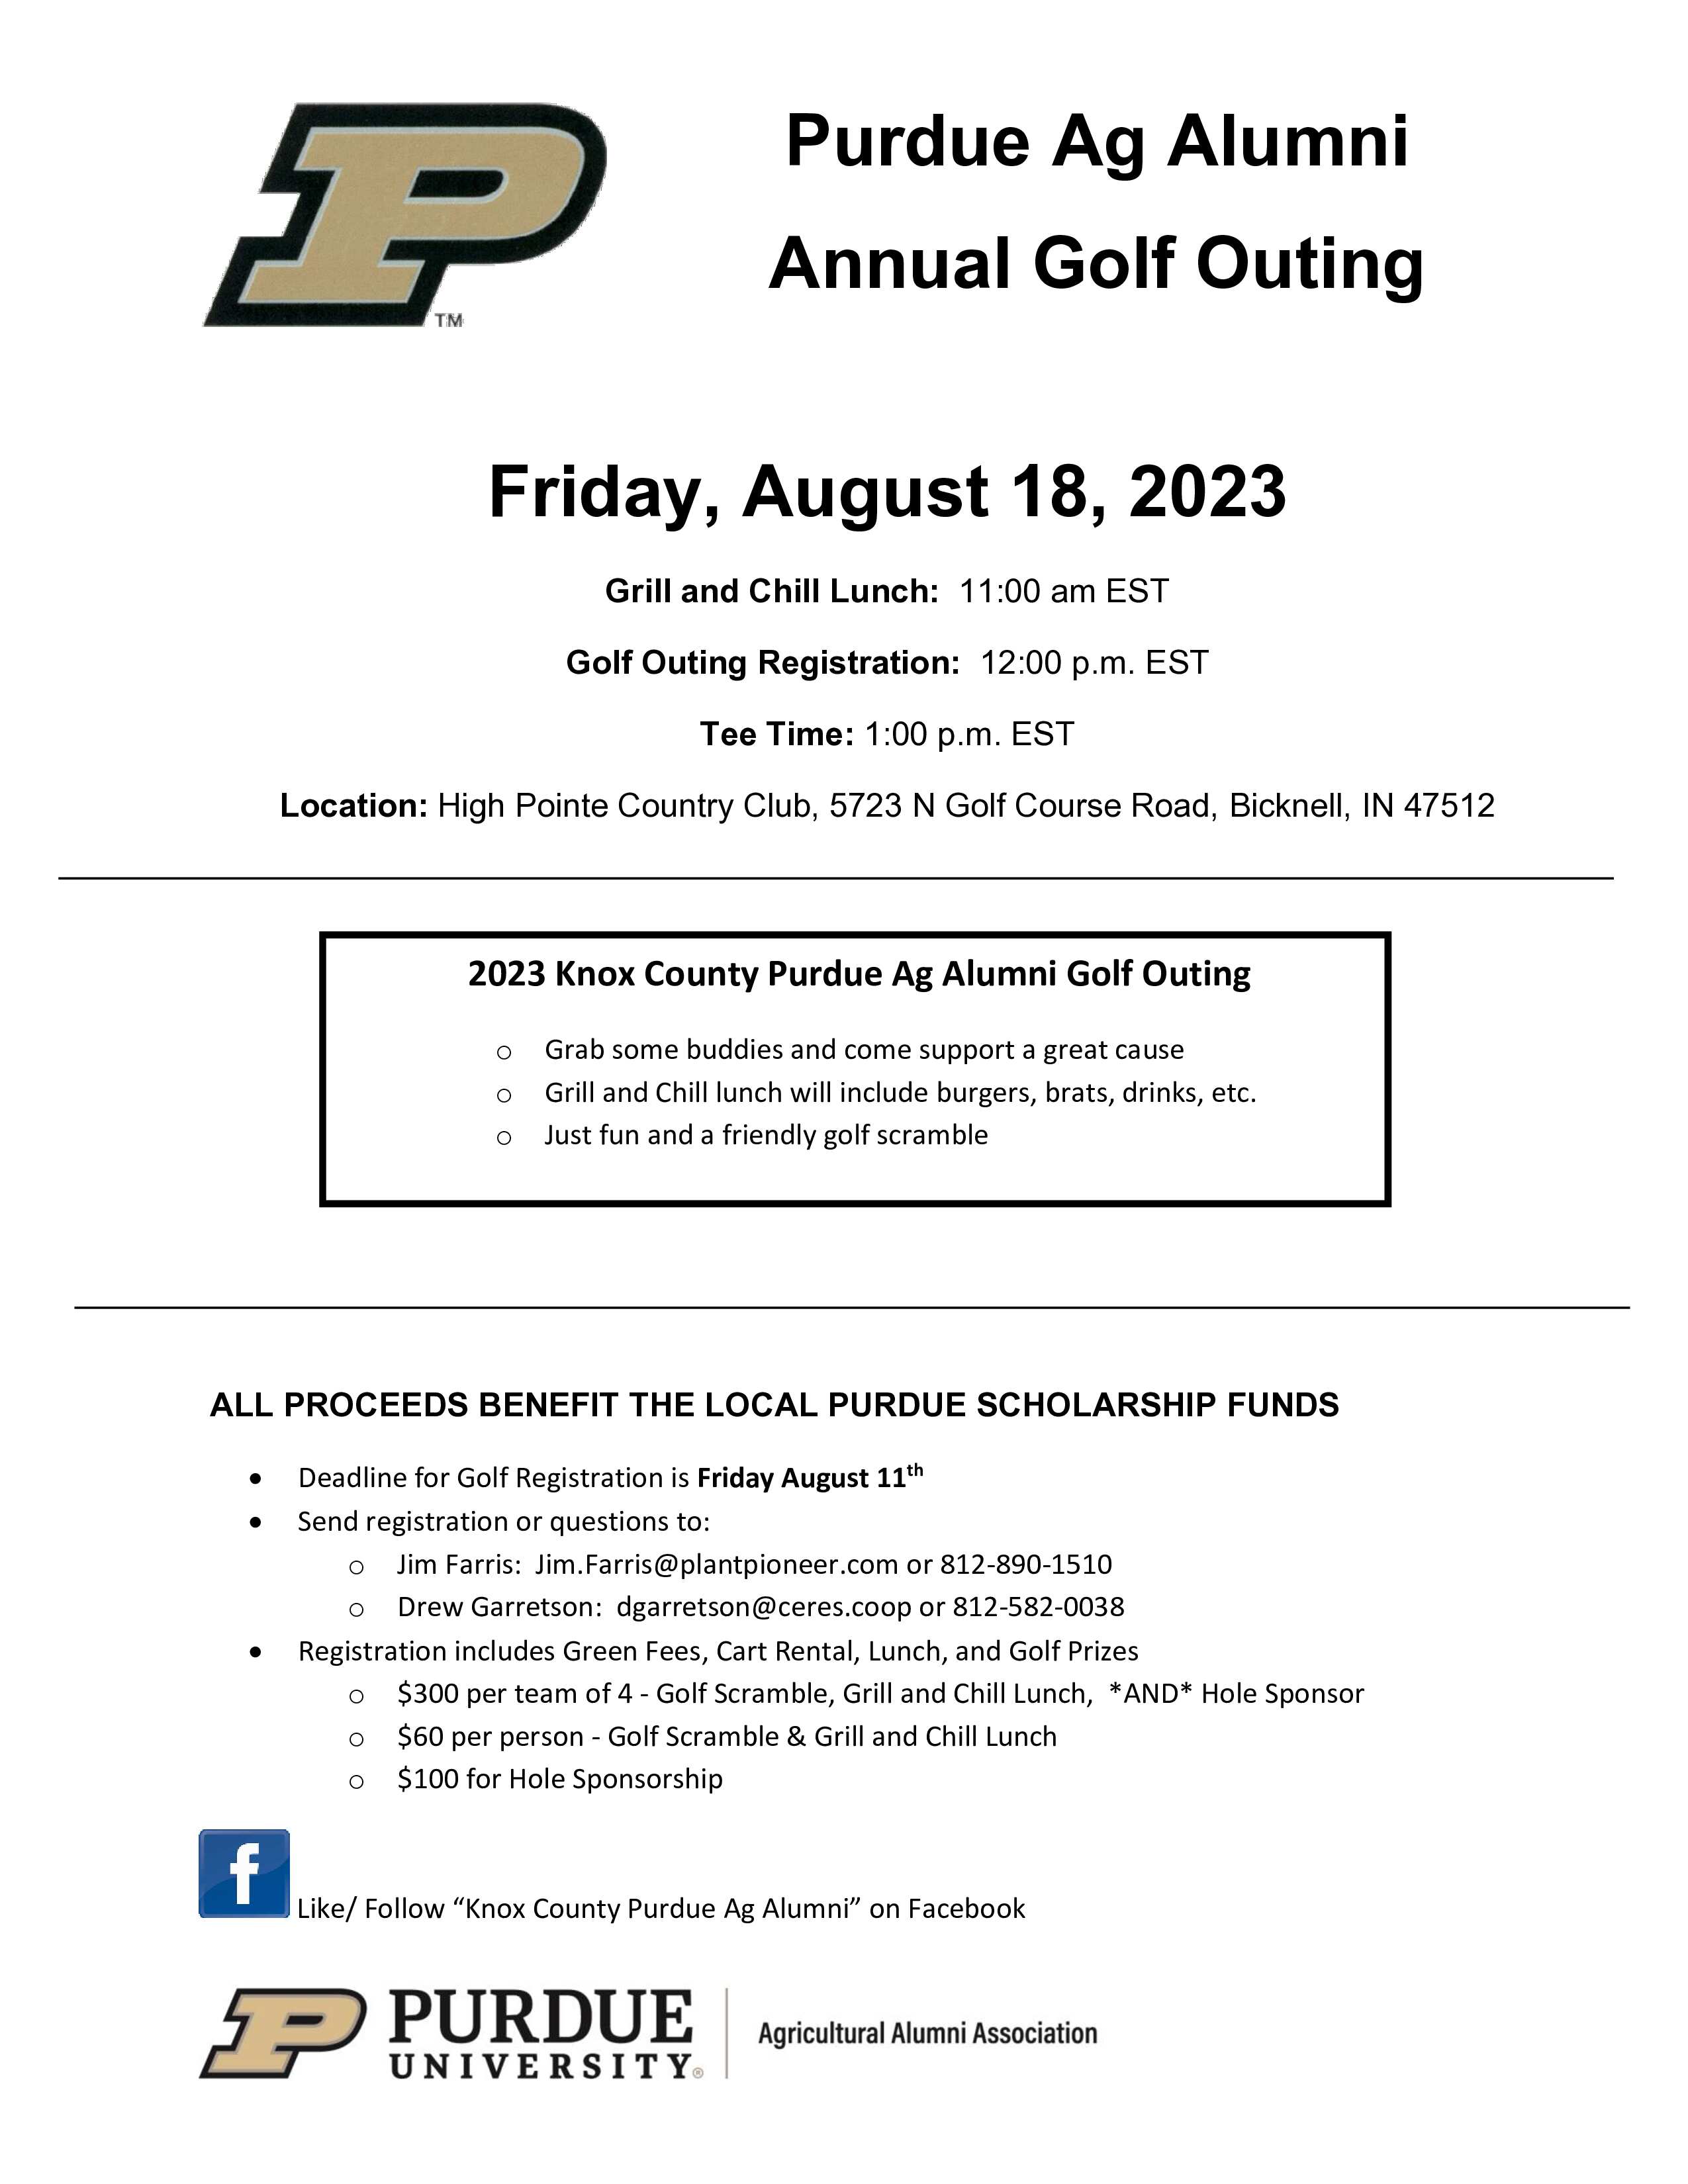 2023-Knox-County-Purdue-Ag-Alumni-Annual-Golf-Outing.jpg